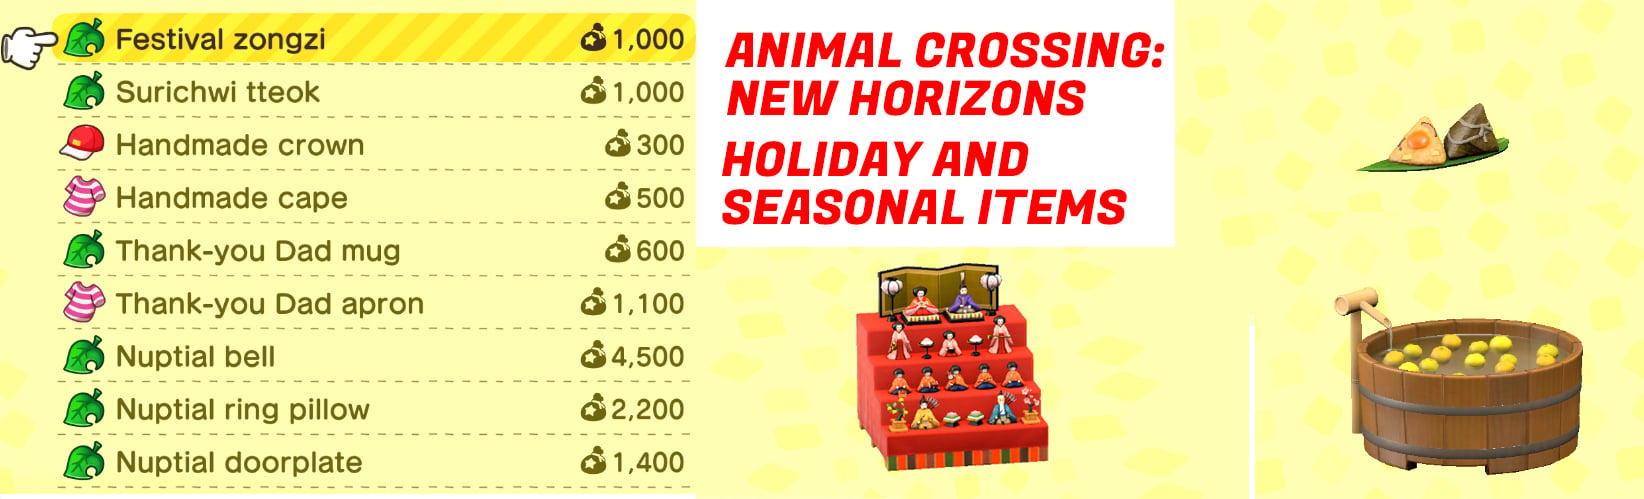  Animal Crossing: New Horizons Holiday and Seasonal Items